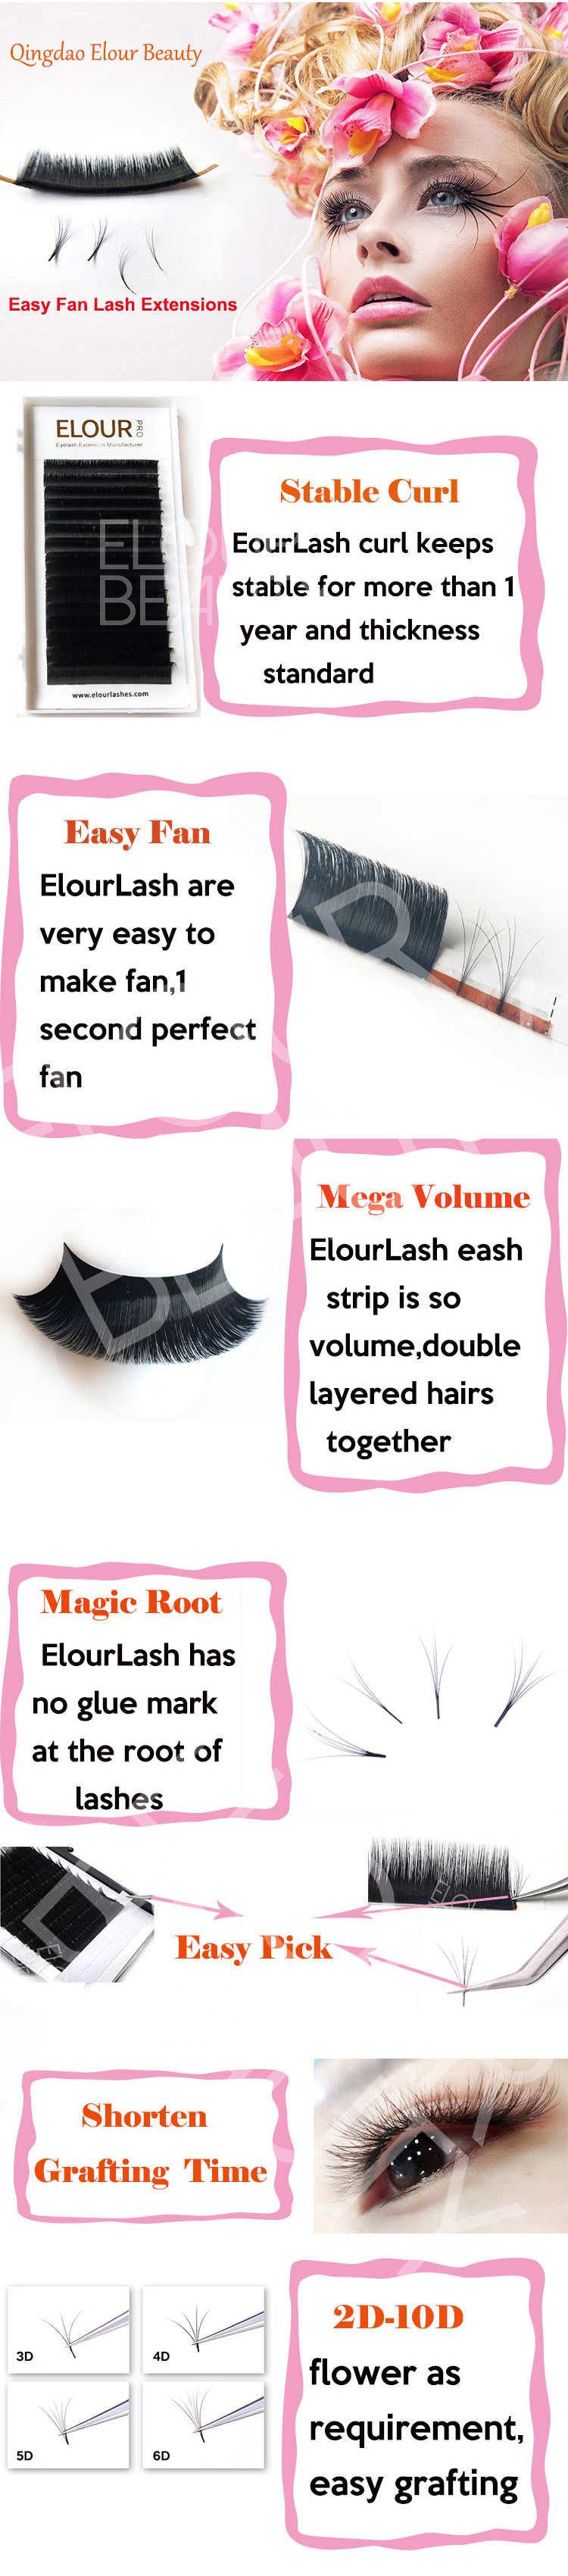 the-best-easy-fan-eyelash-extensions-wholesale.jpg